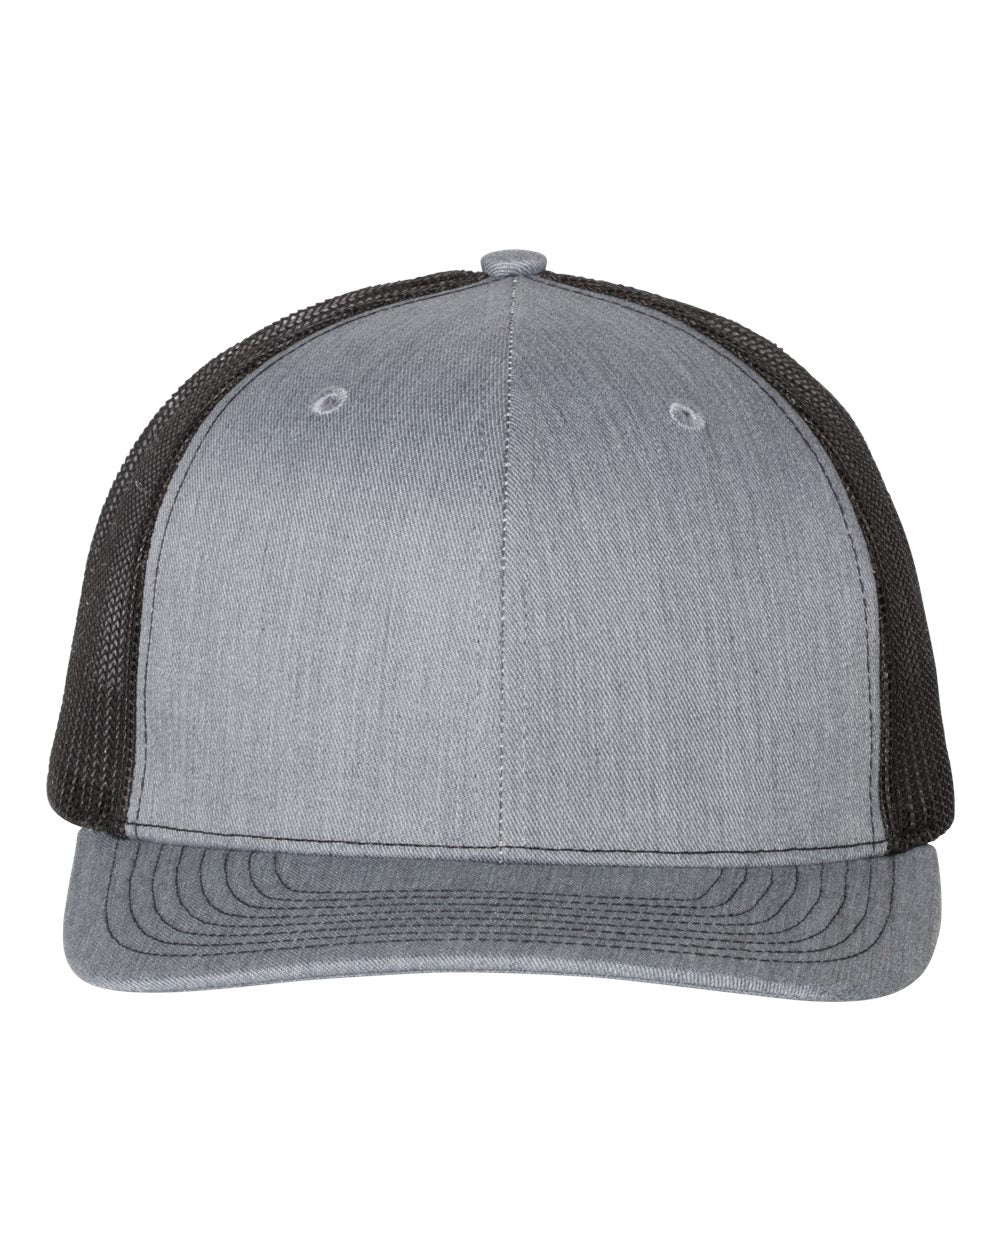 Richardson Snapback Trucker Hat (112) in Heather Grey/Black